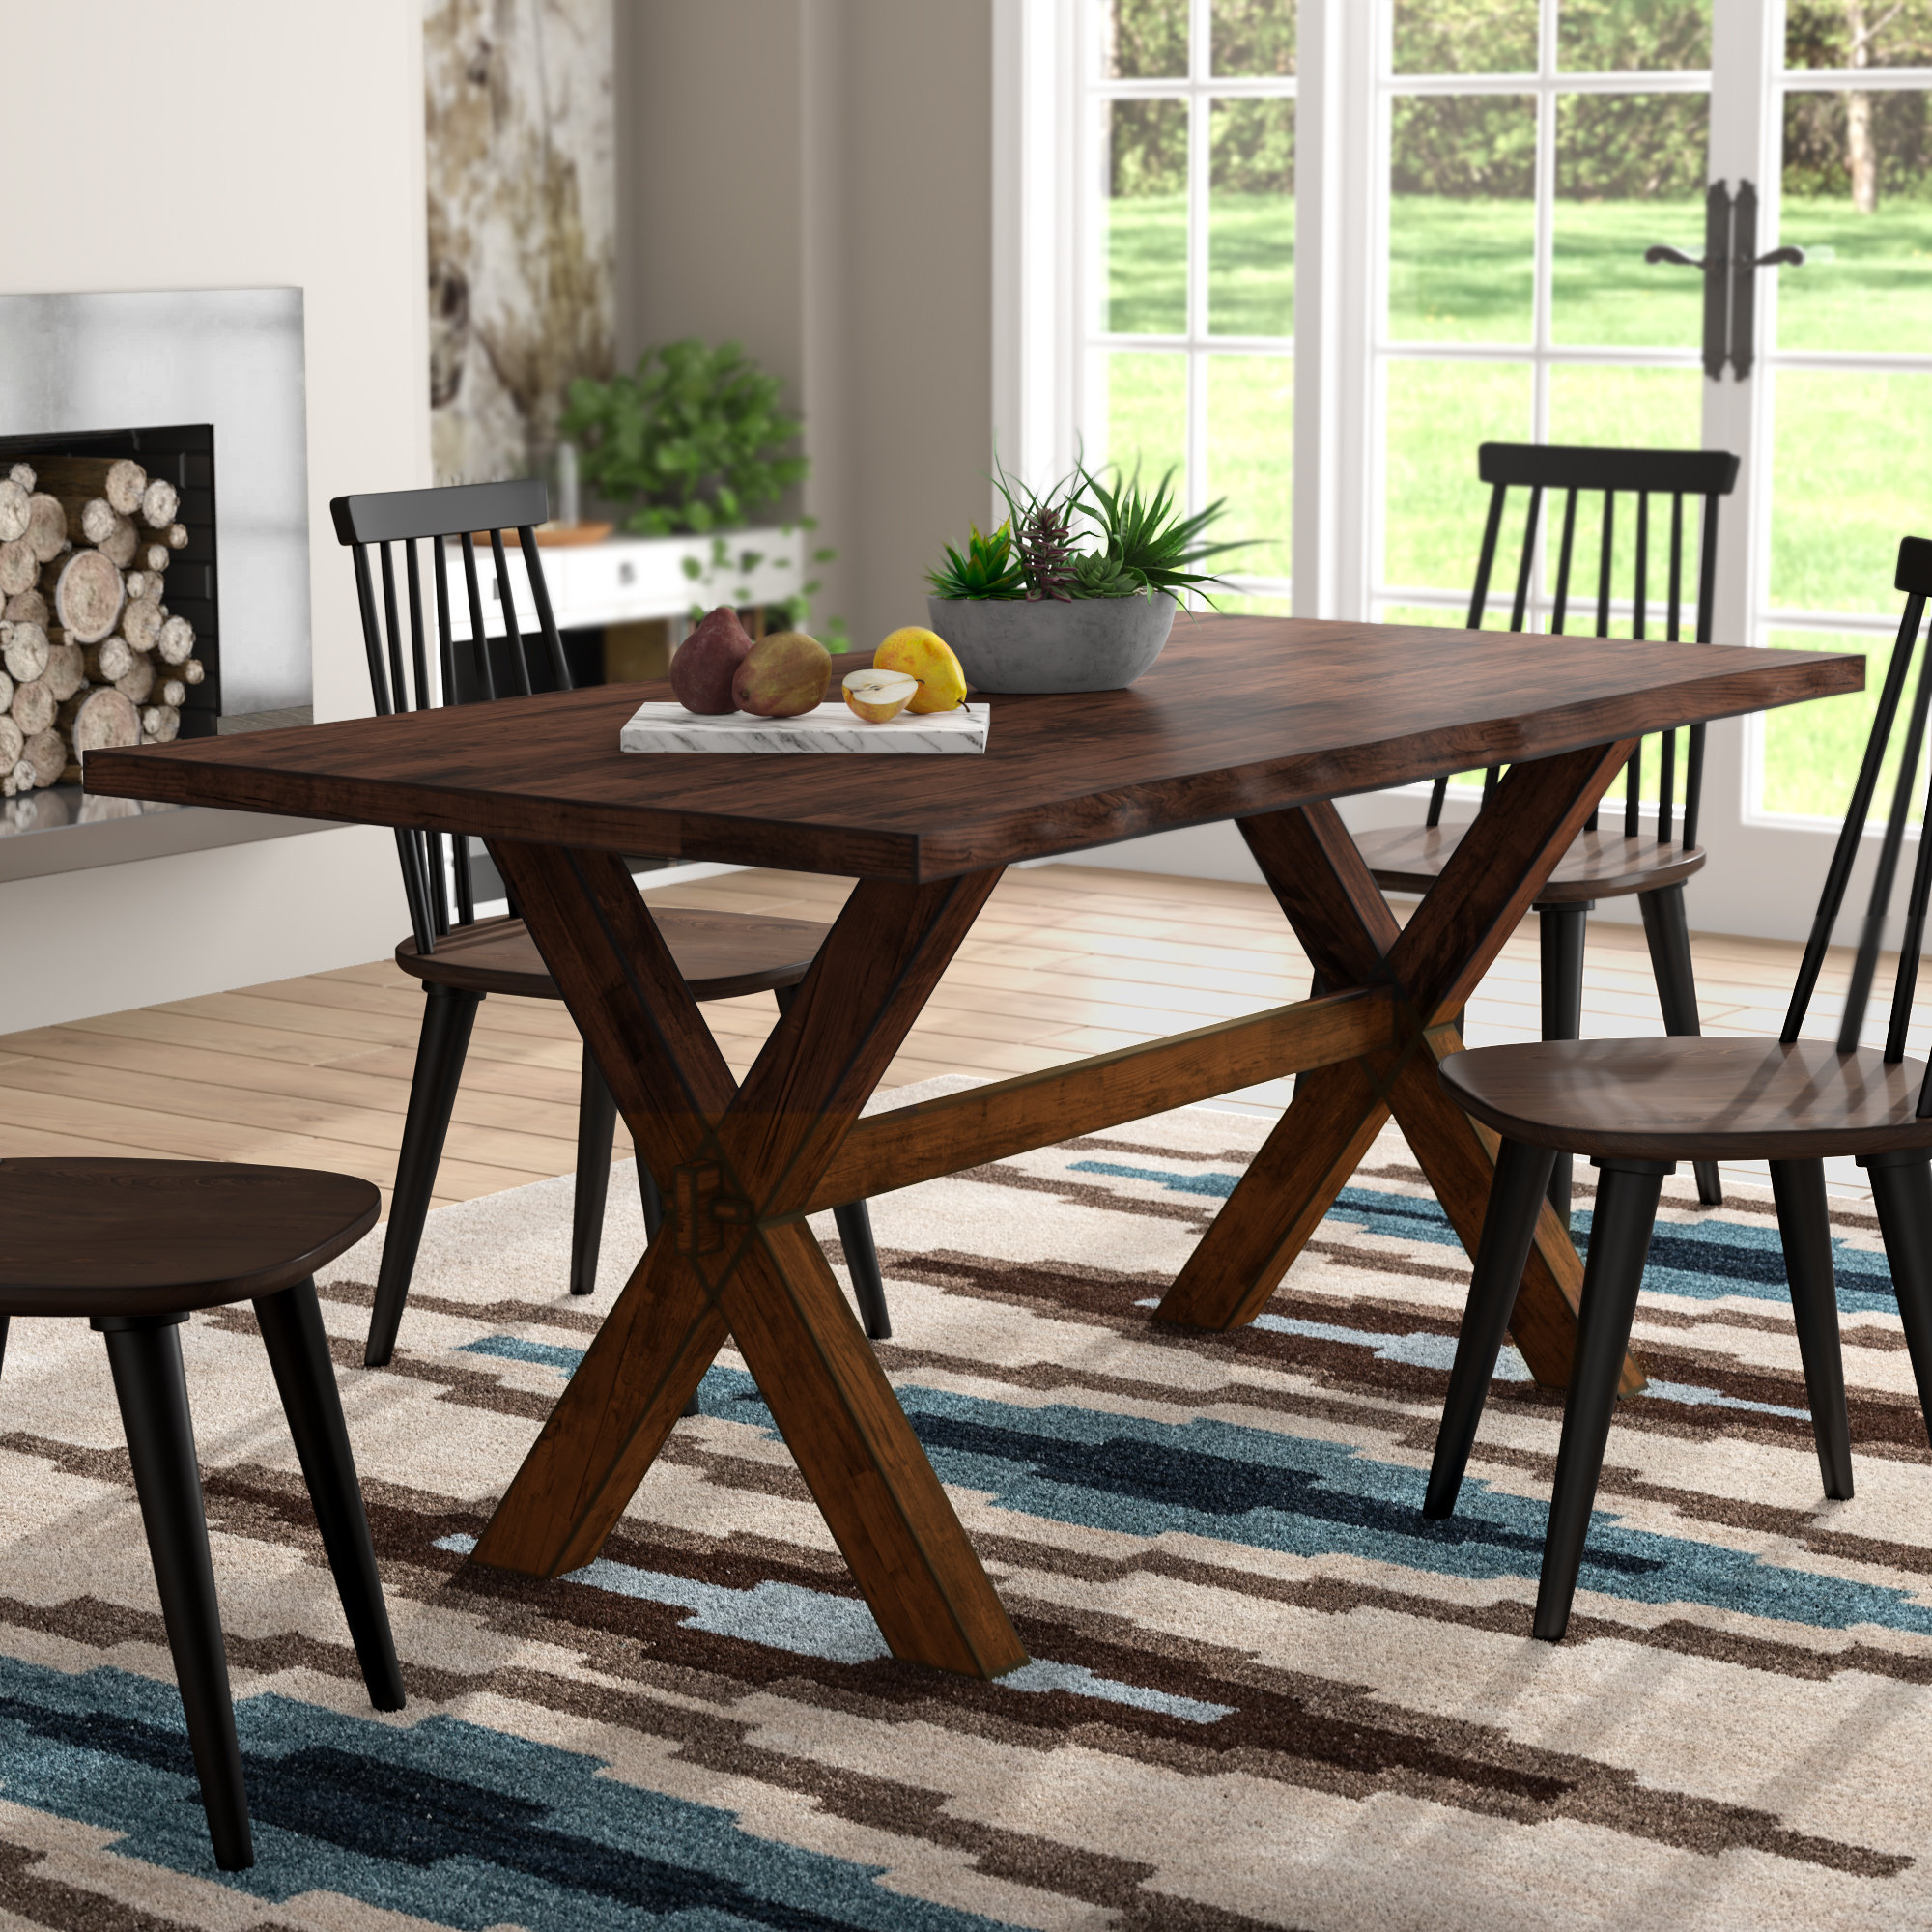 Millwood Pines Tiggs Solid Wood Dining Table Reviews Wayfair